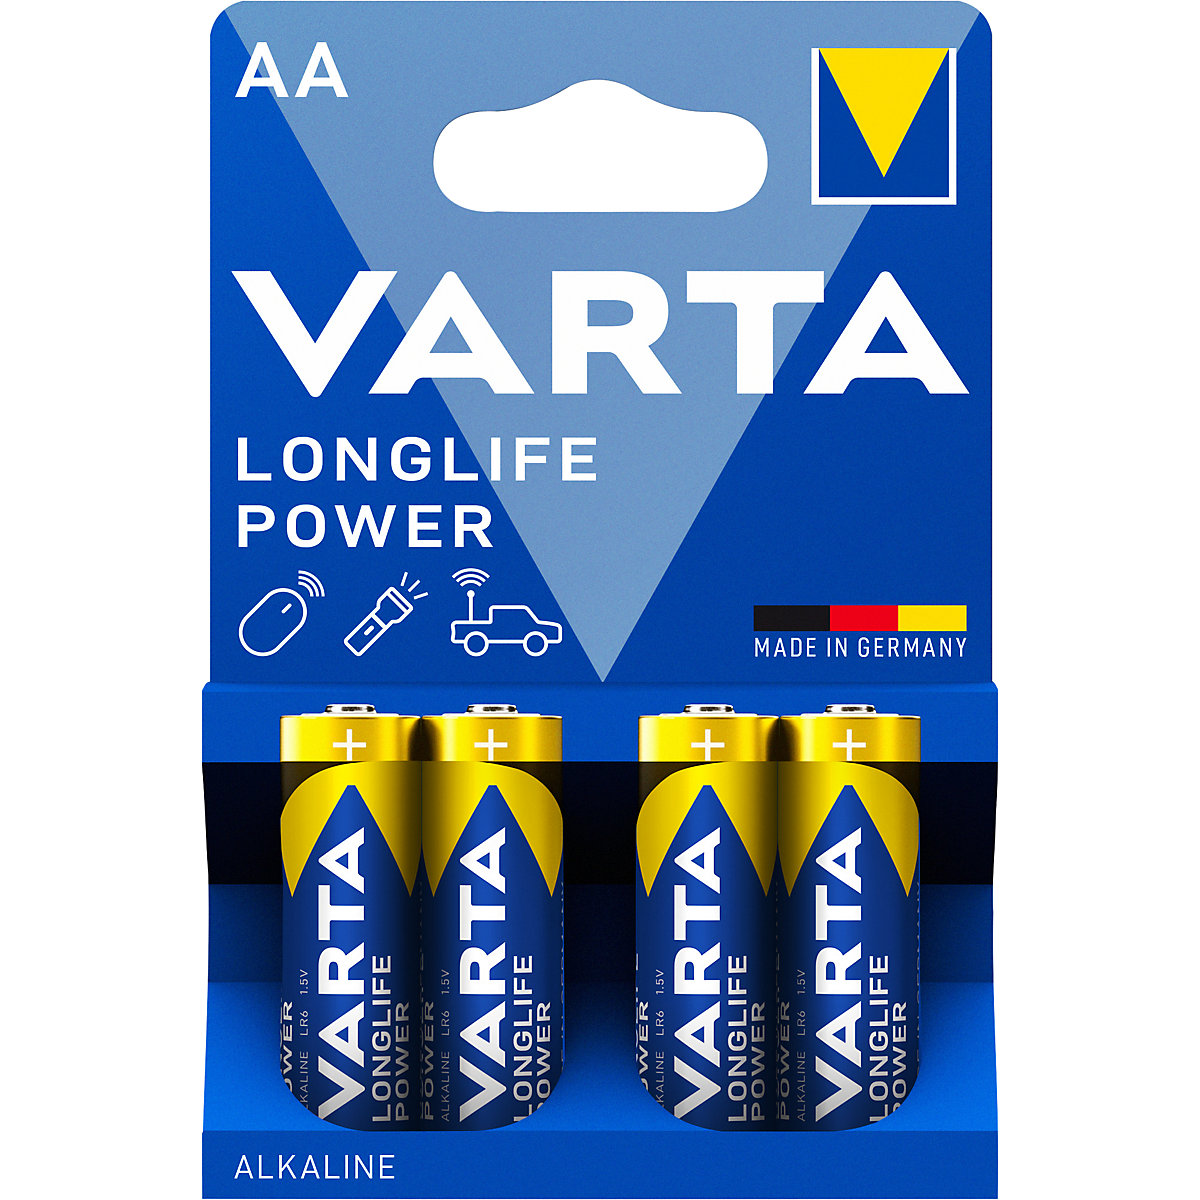 LONGLIFE power battery – VARTA